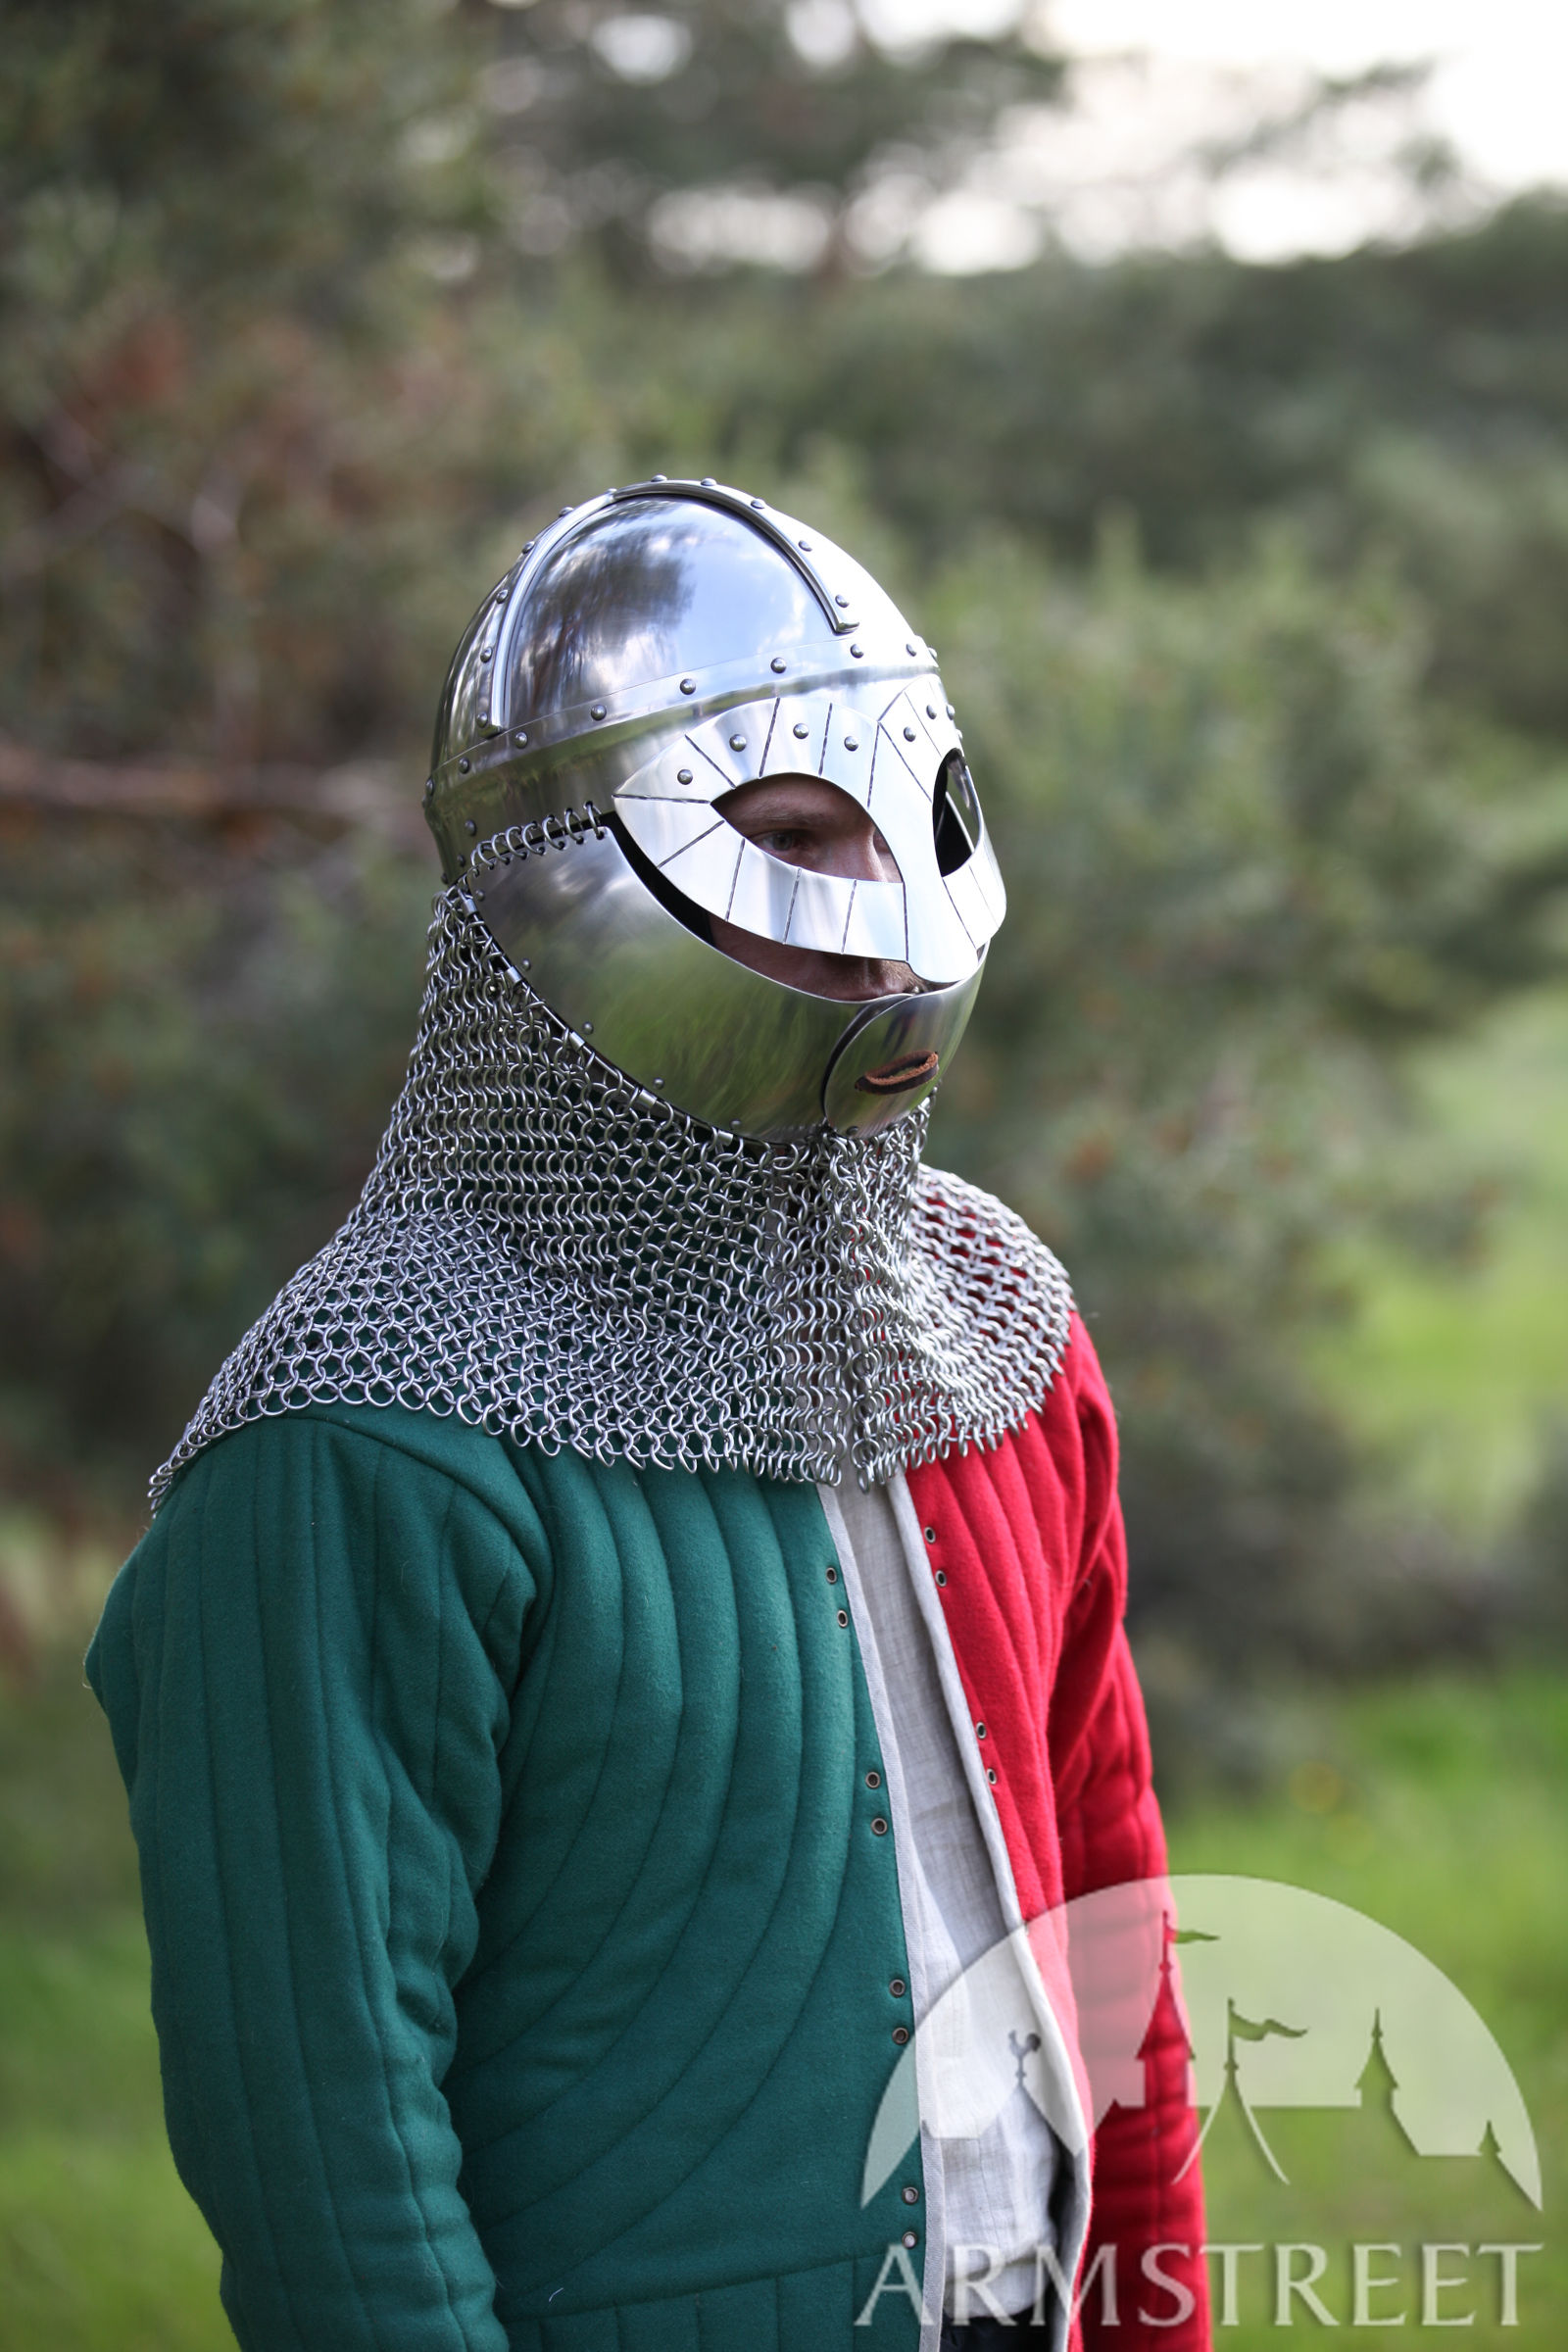 Viking helmet for sale. Available in: stainless steel 16 ga 1.5 mm, stainless steel 14 ga 2 mm ...